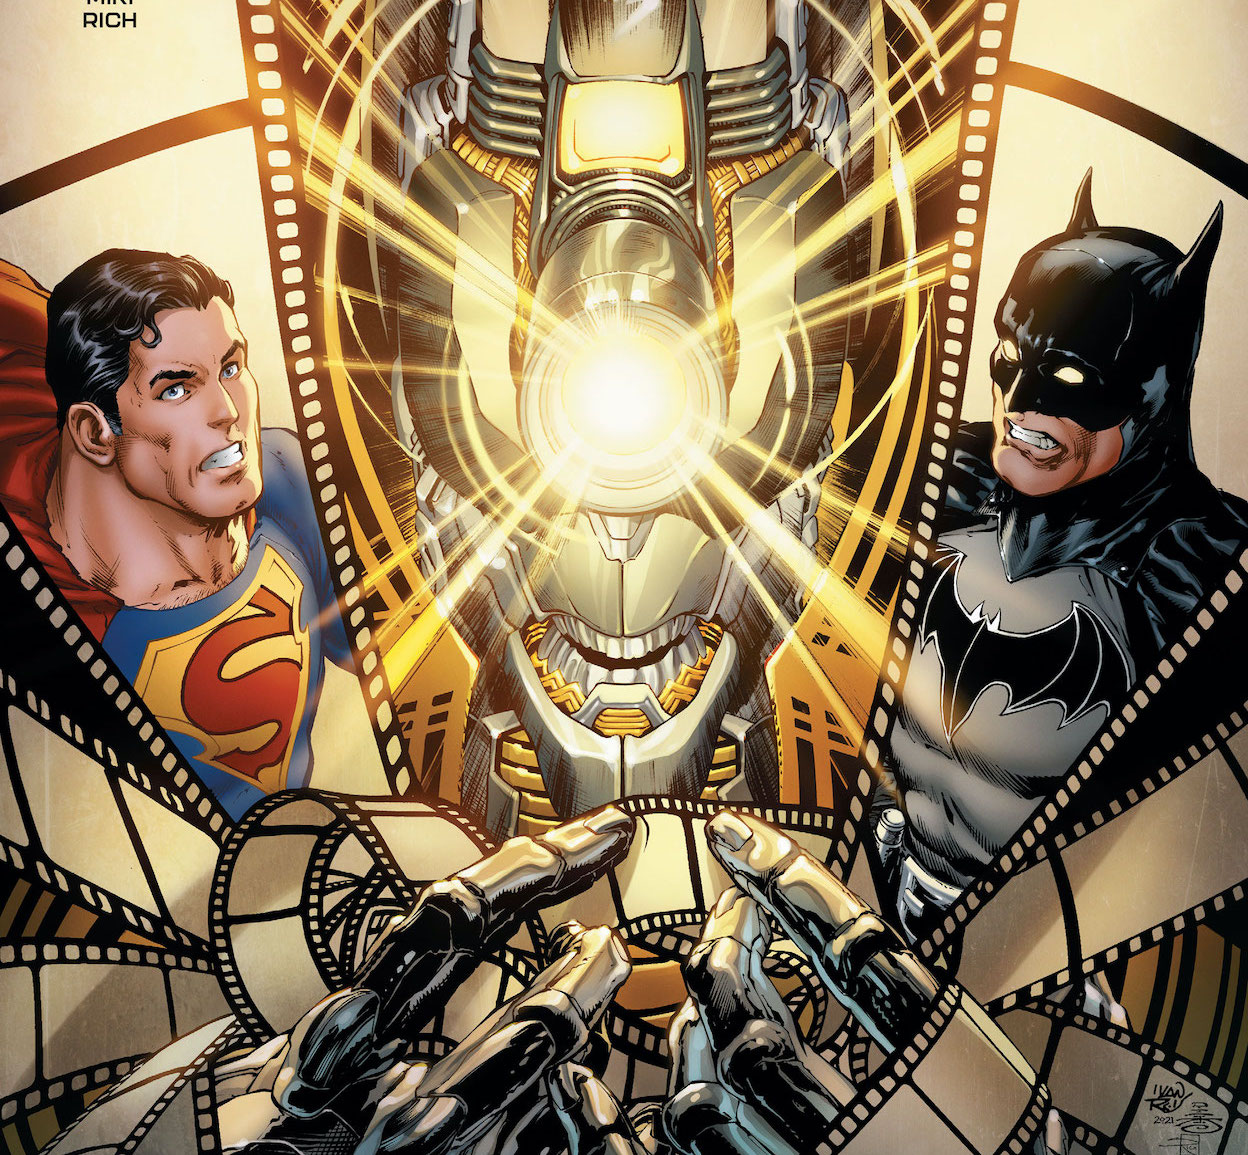 'Batman/Superman' #18 is good Elseworlds storytelling